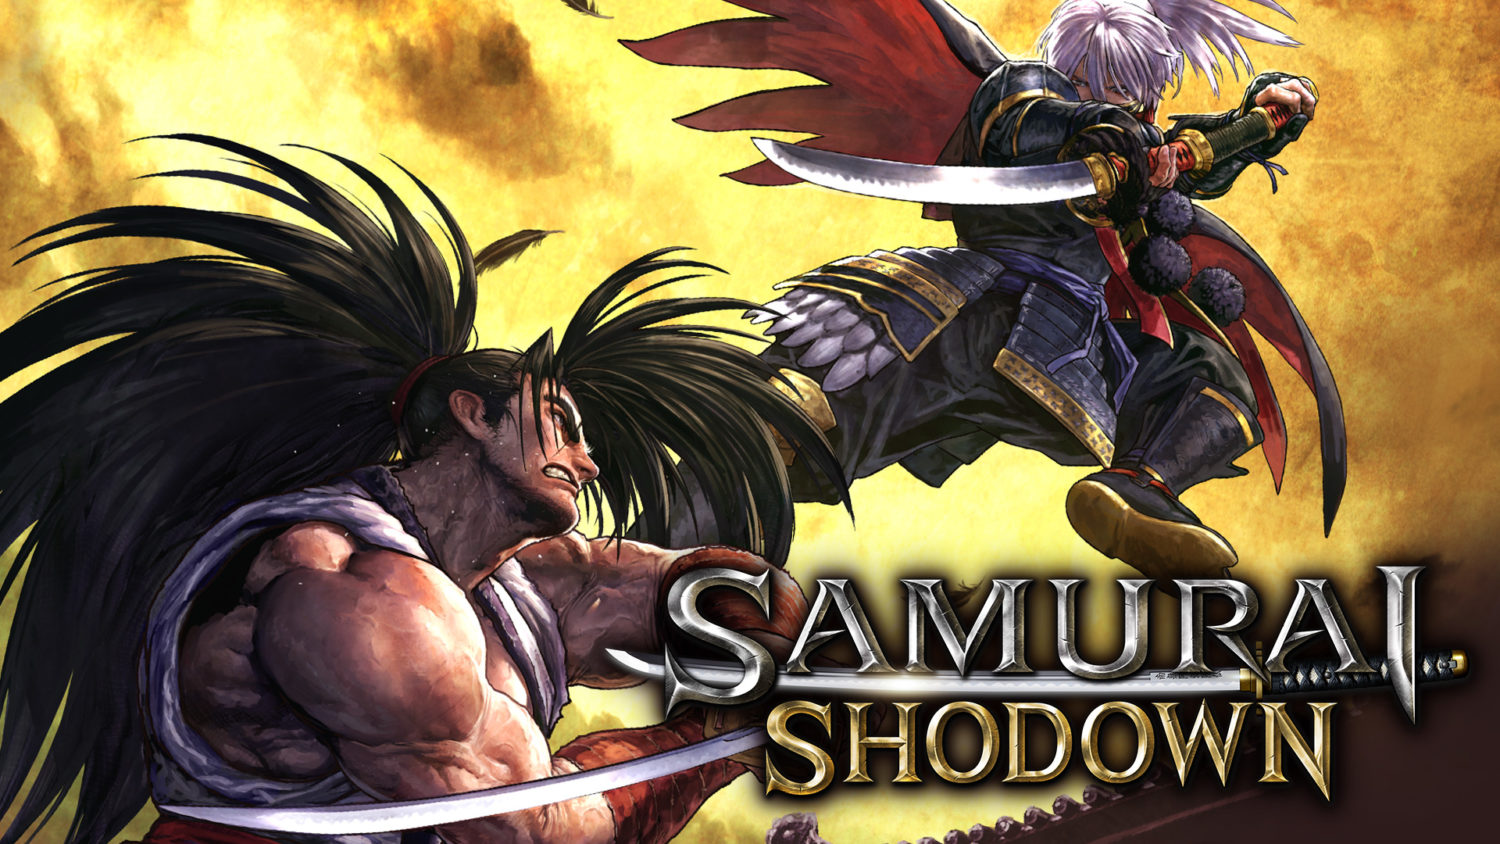 Samurai Shodown coming to Switch in Q1 2020